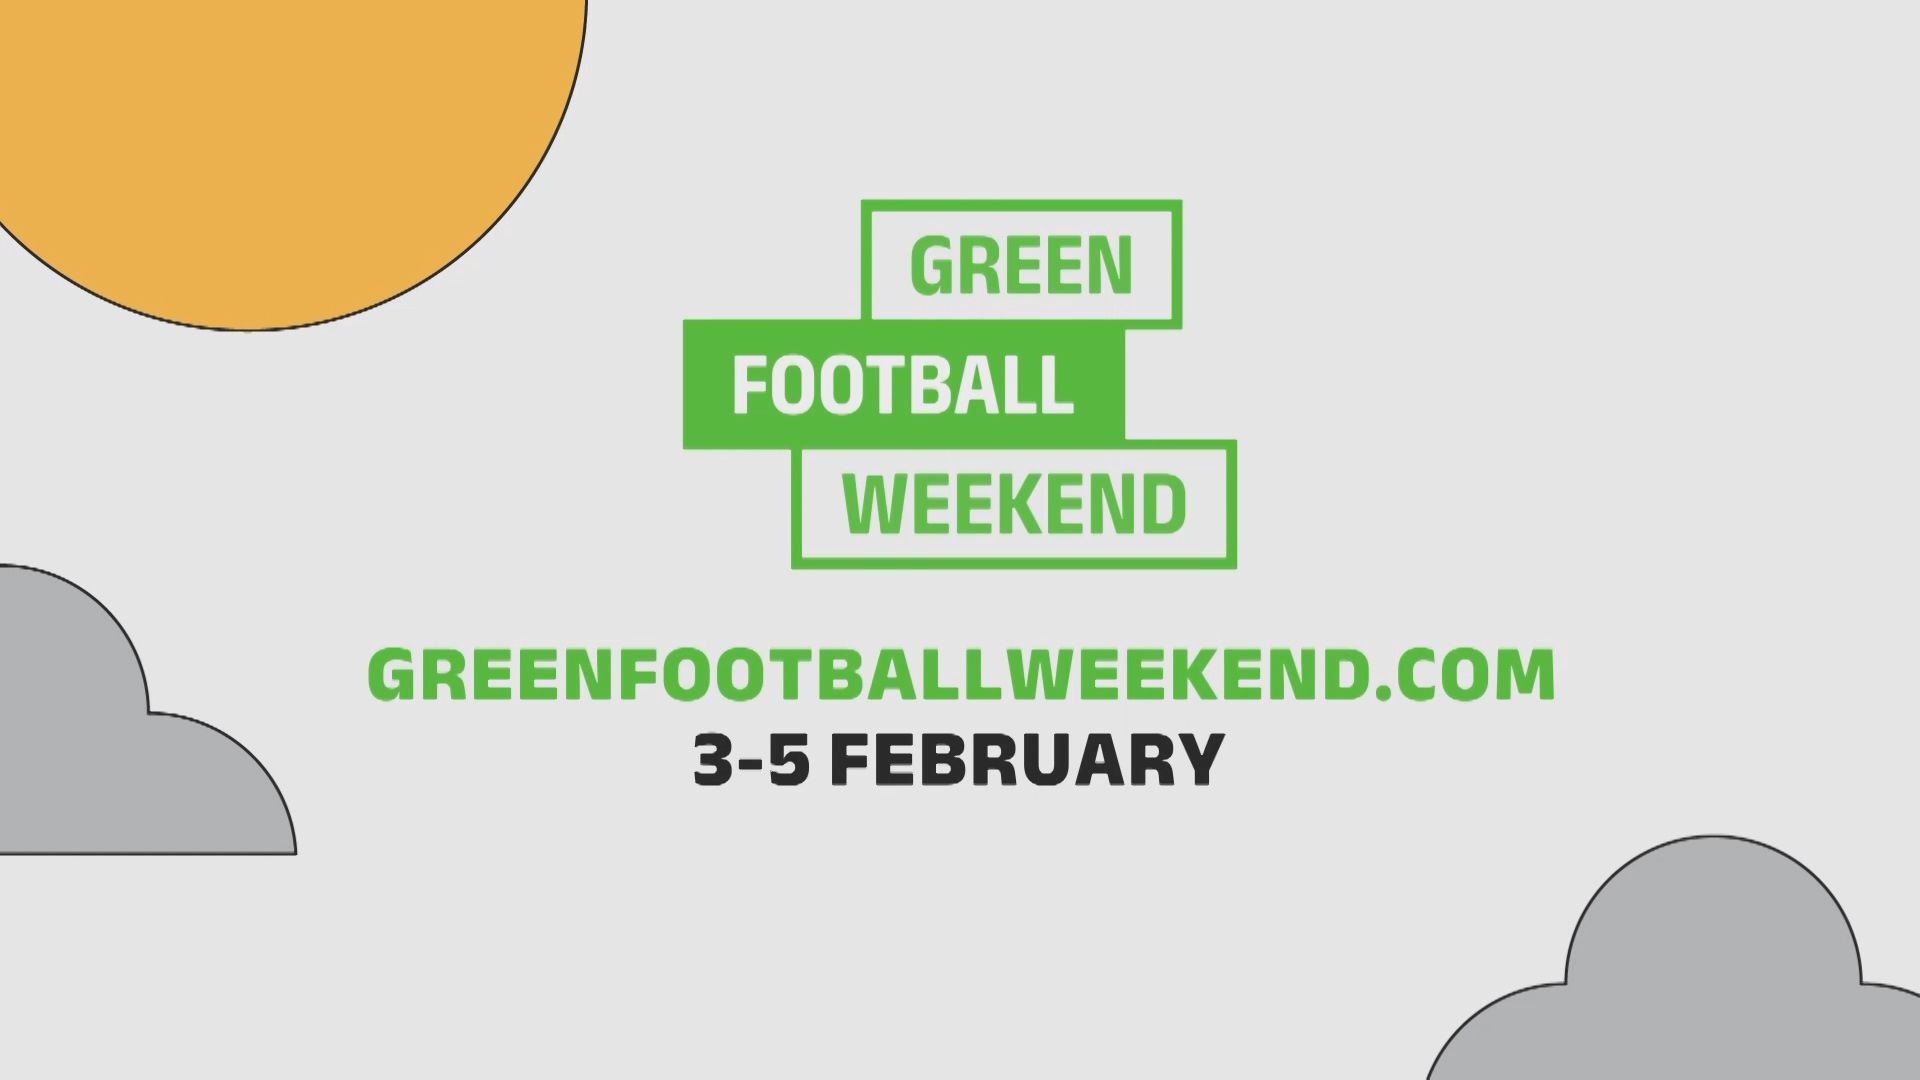 Green Football Weekend is coming!